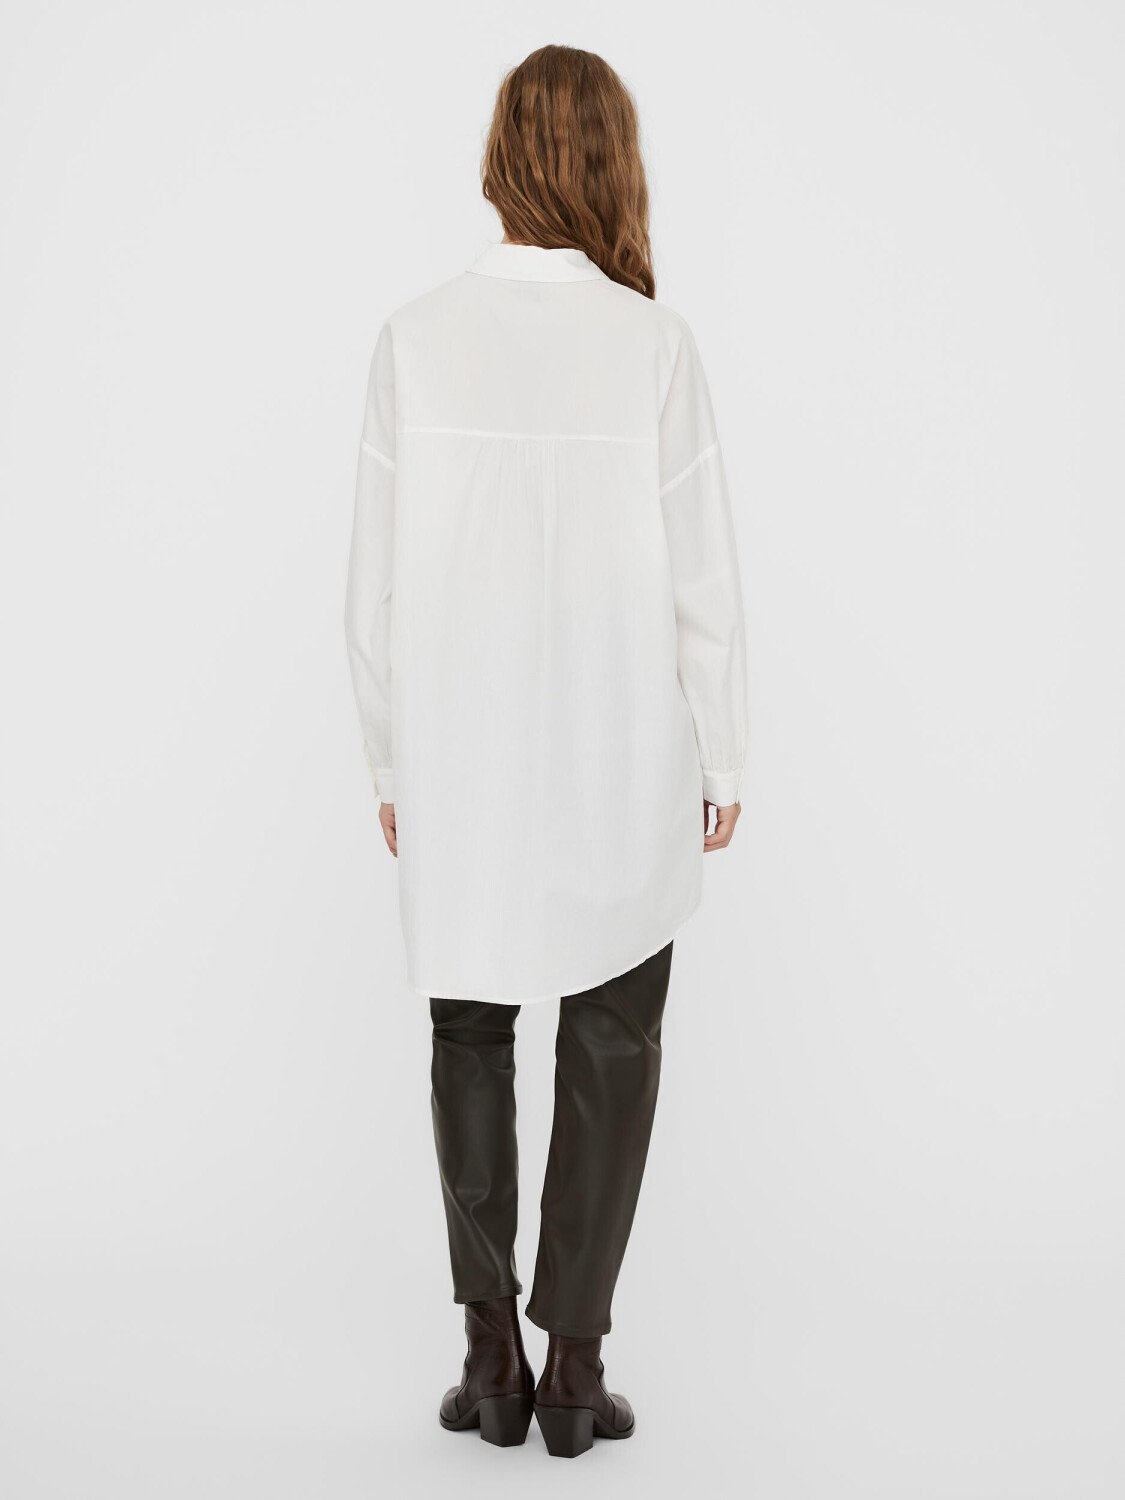 Moda snow Vero € white L/s | ab bei Oversize (10250576) Noos Shirt 15,99 Ga Preisvergleich Vmbina